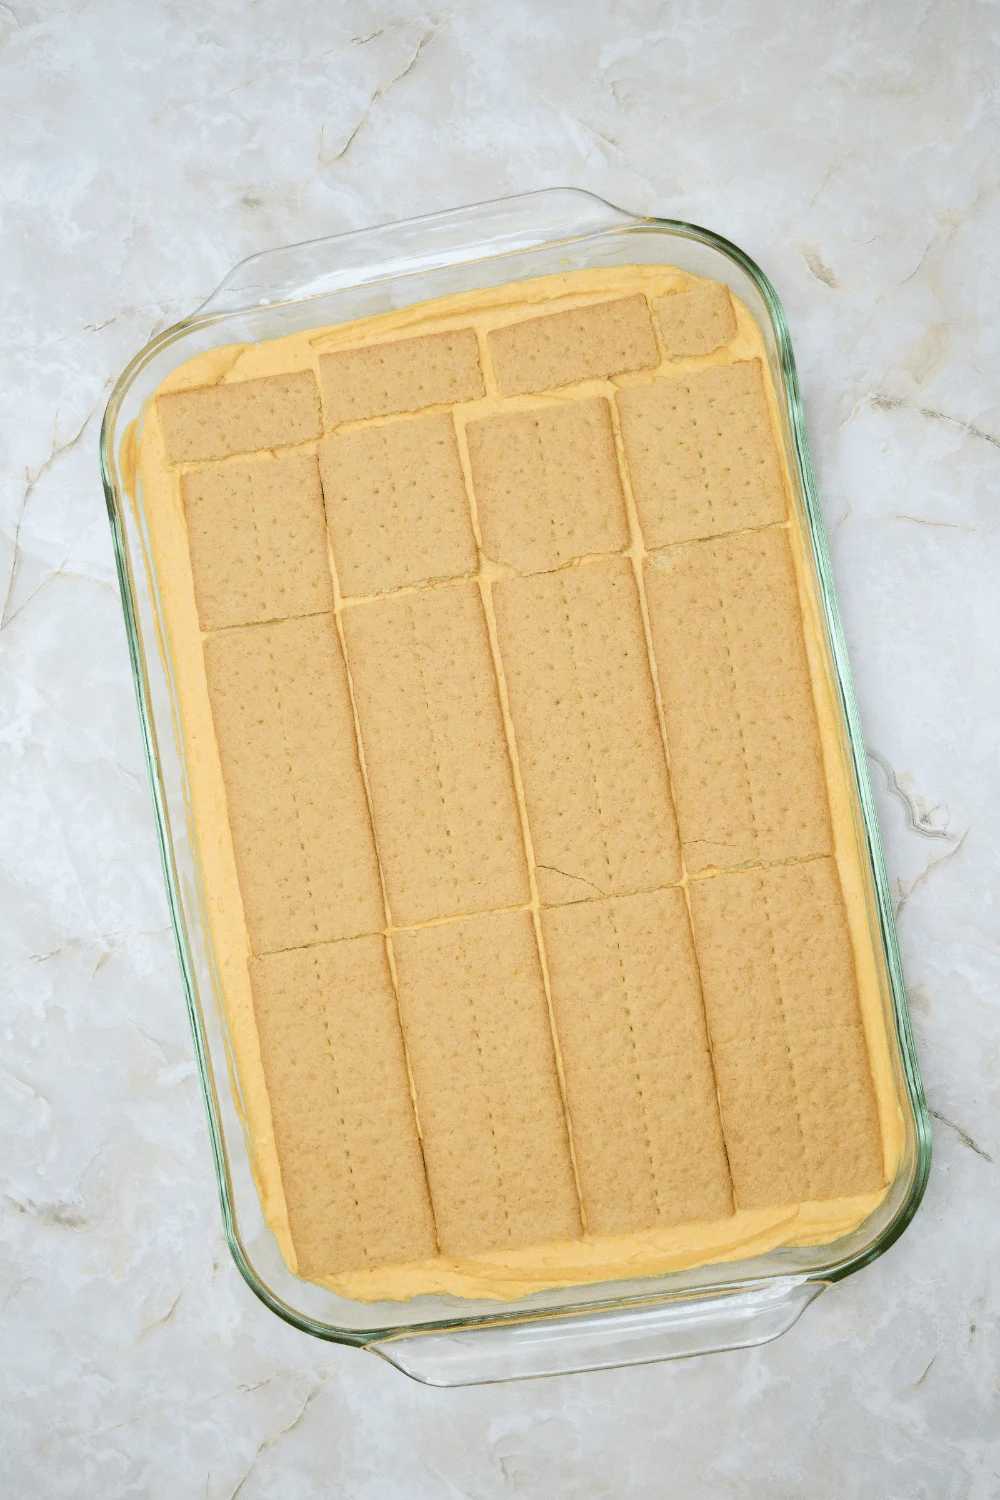 graham cracker layer on top of pumpkin batter to make no bake pumpkin icebox cake